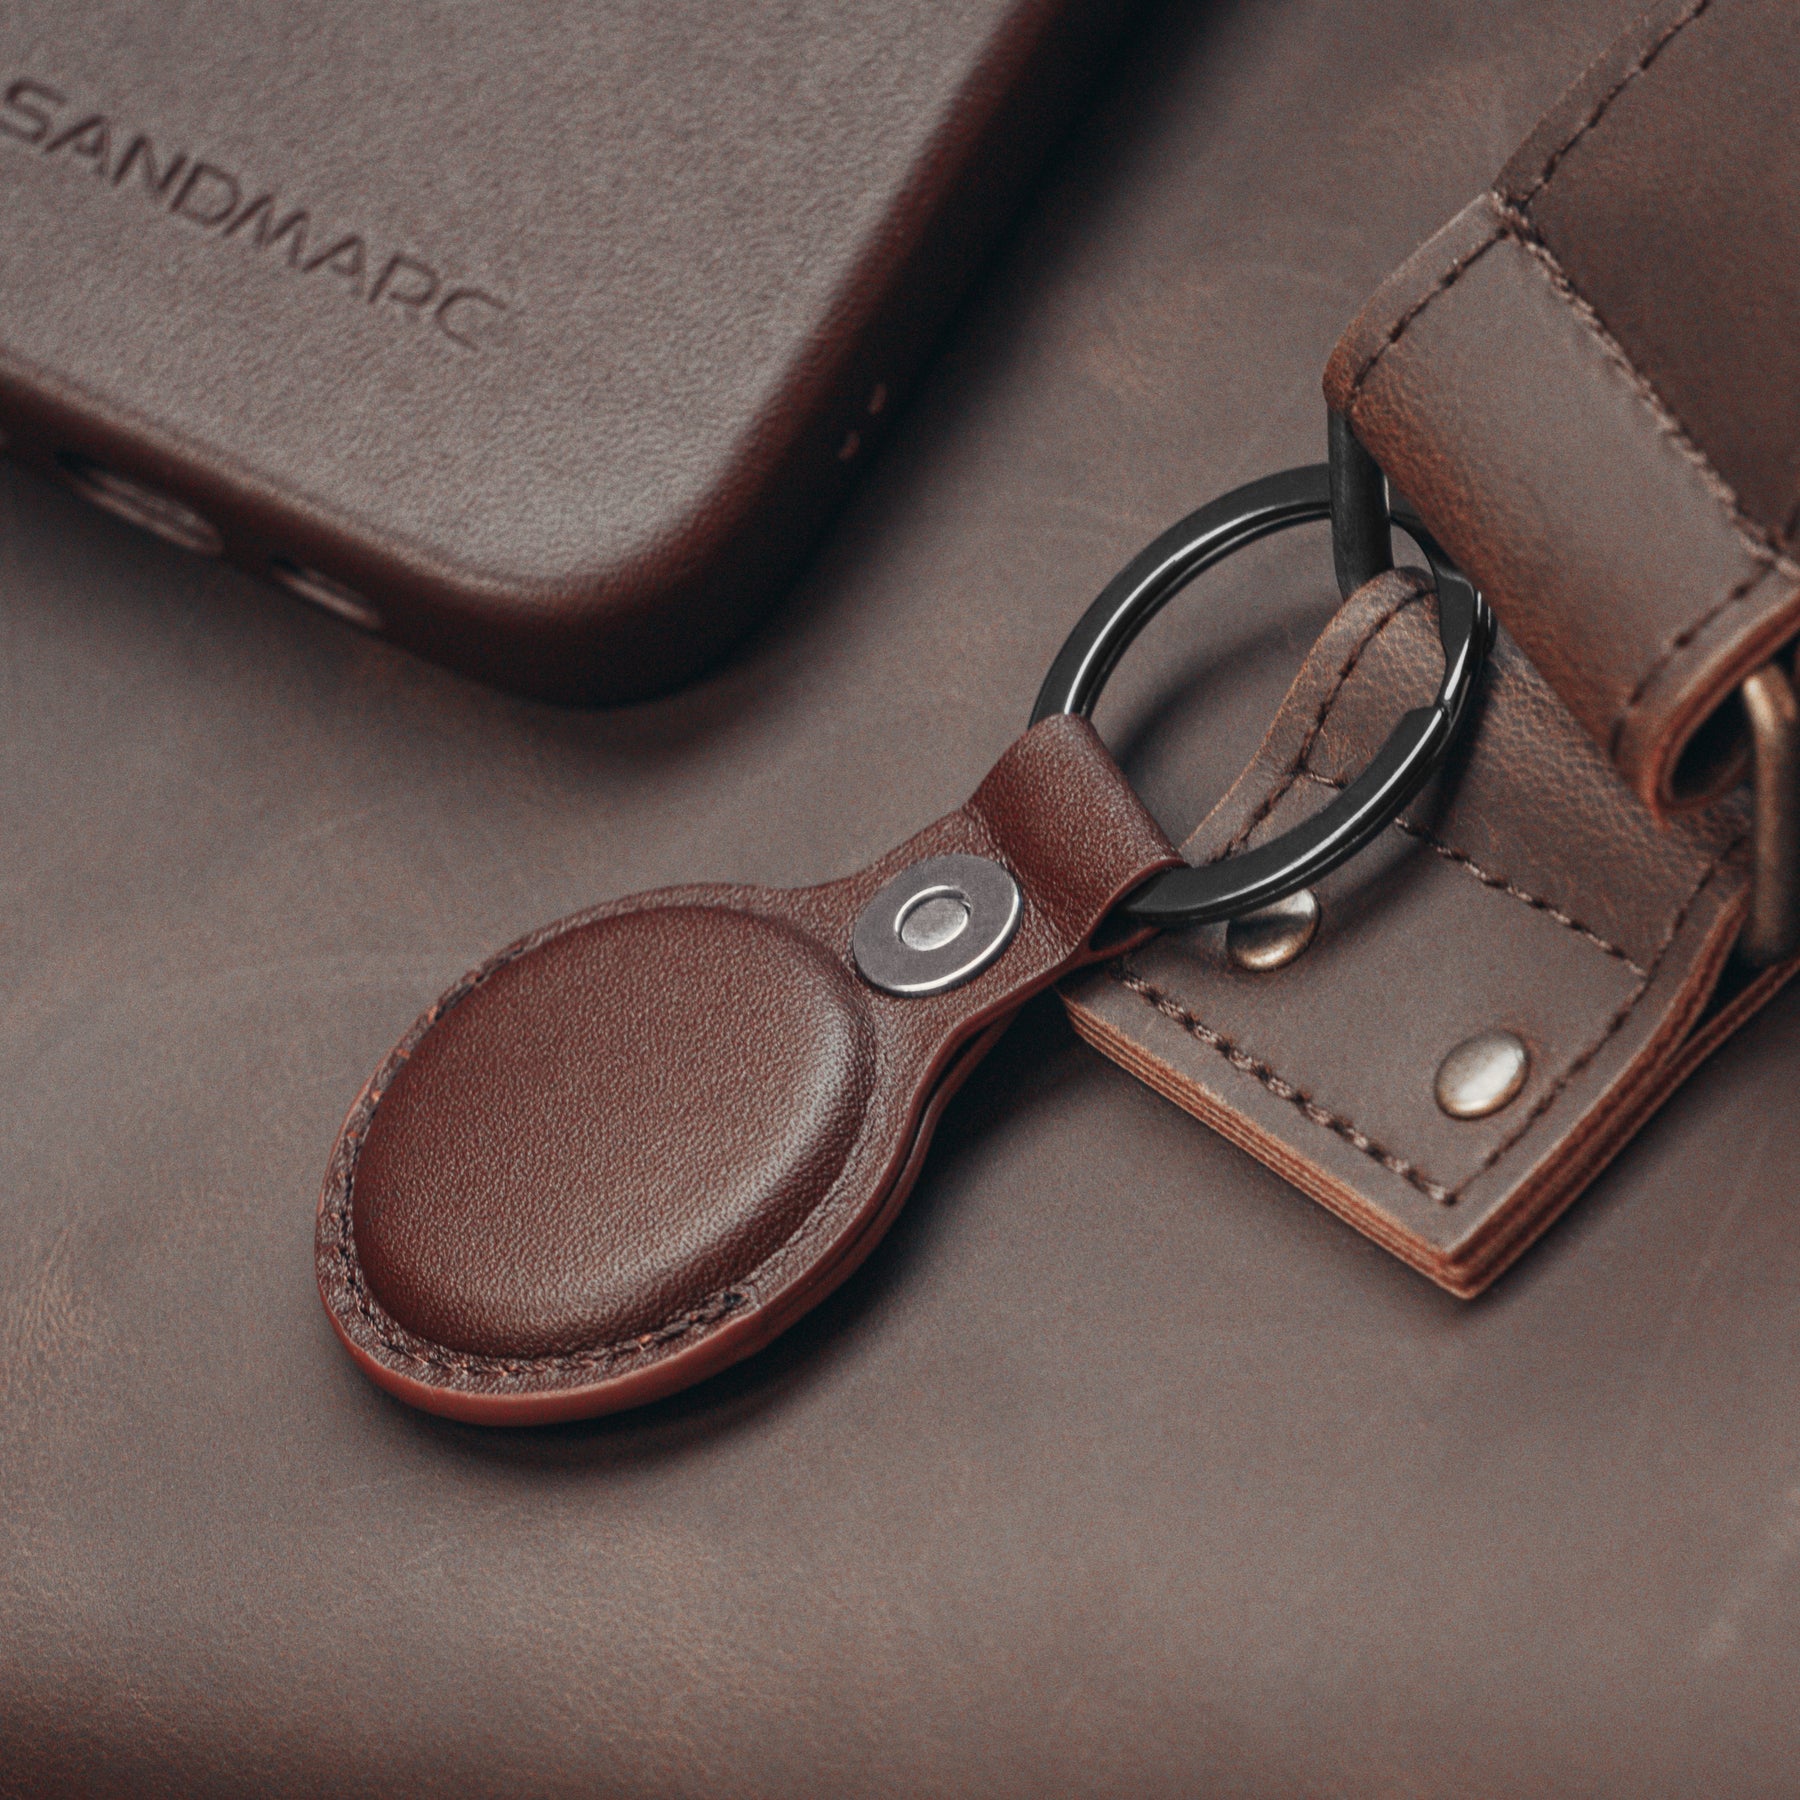 Leather Edition - AirTag Key Chain